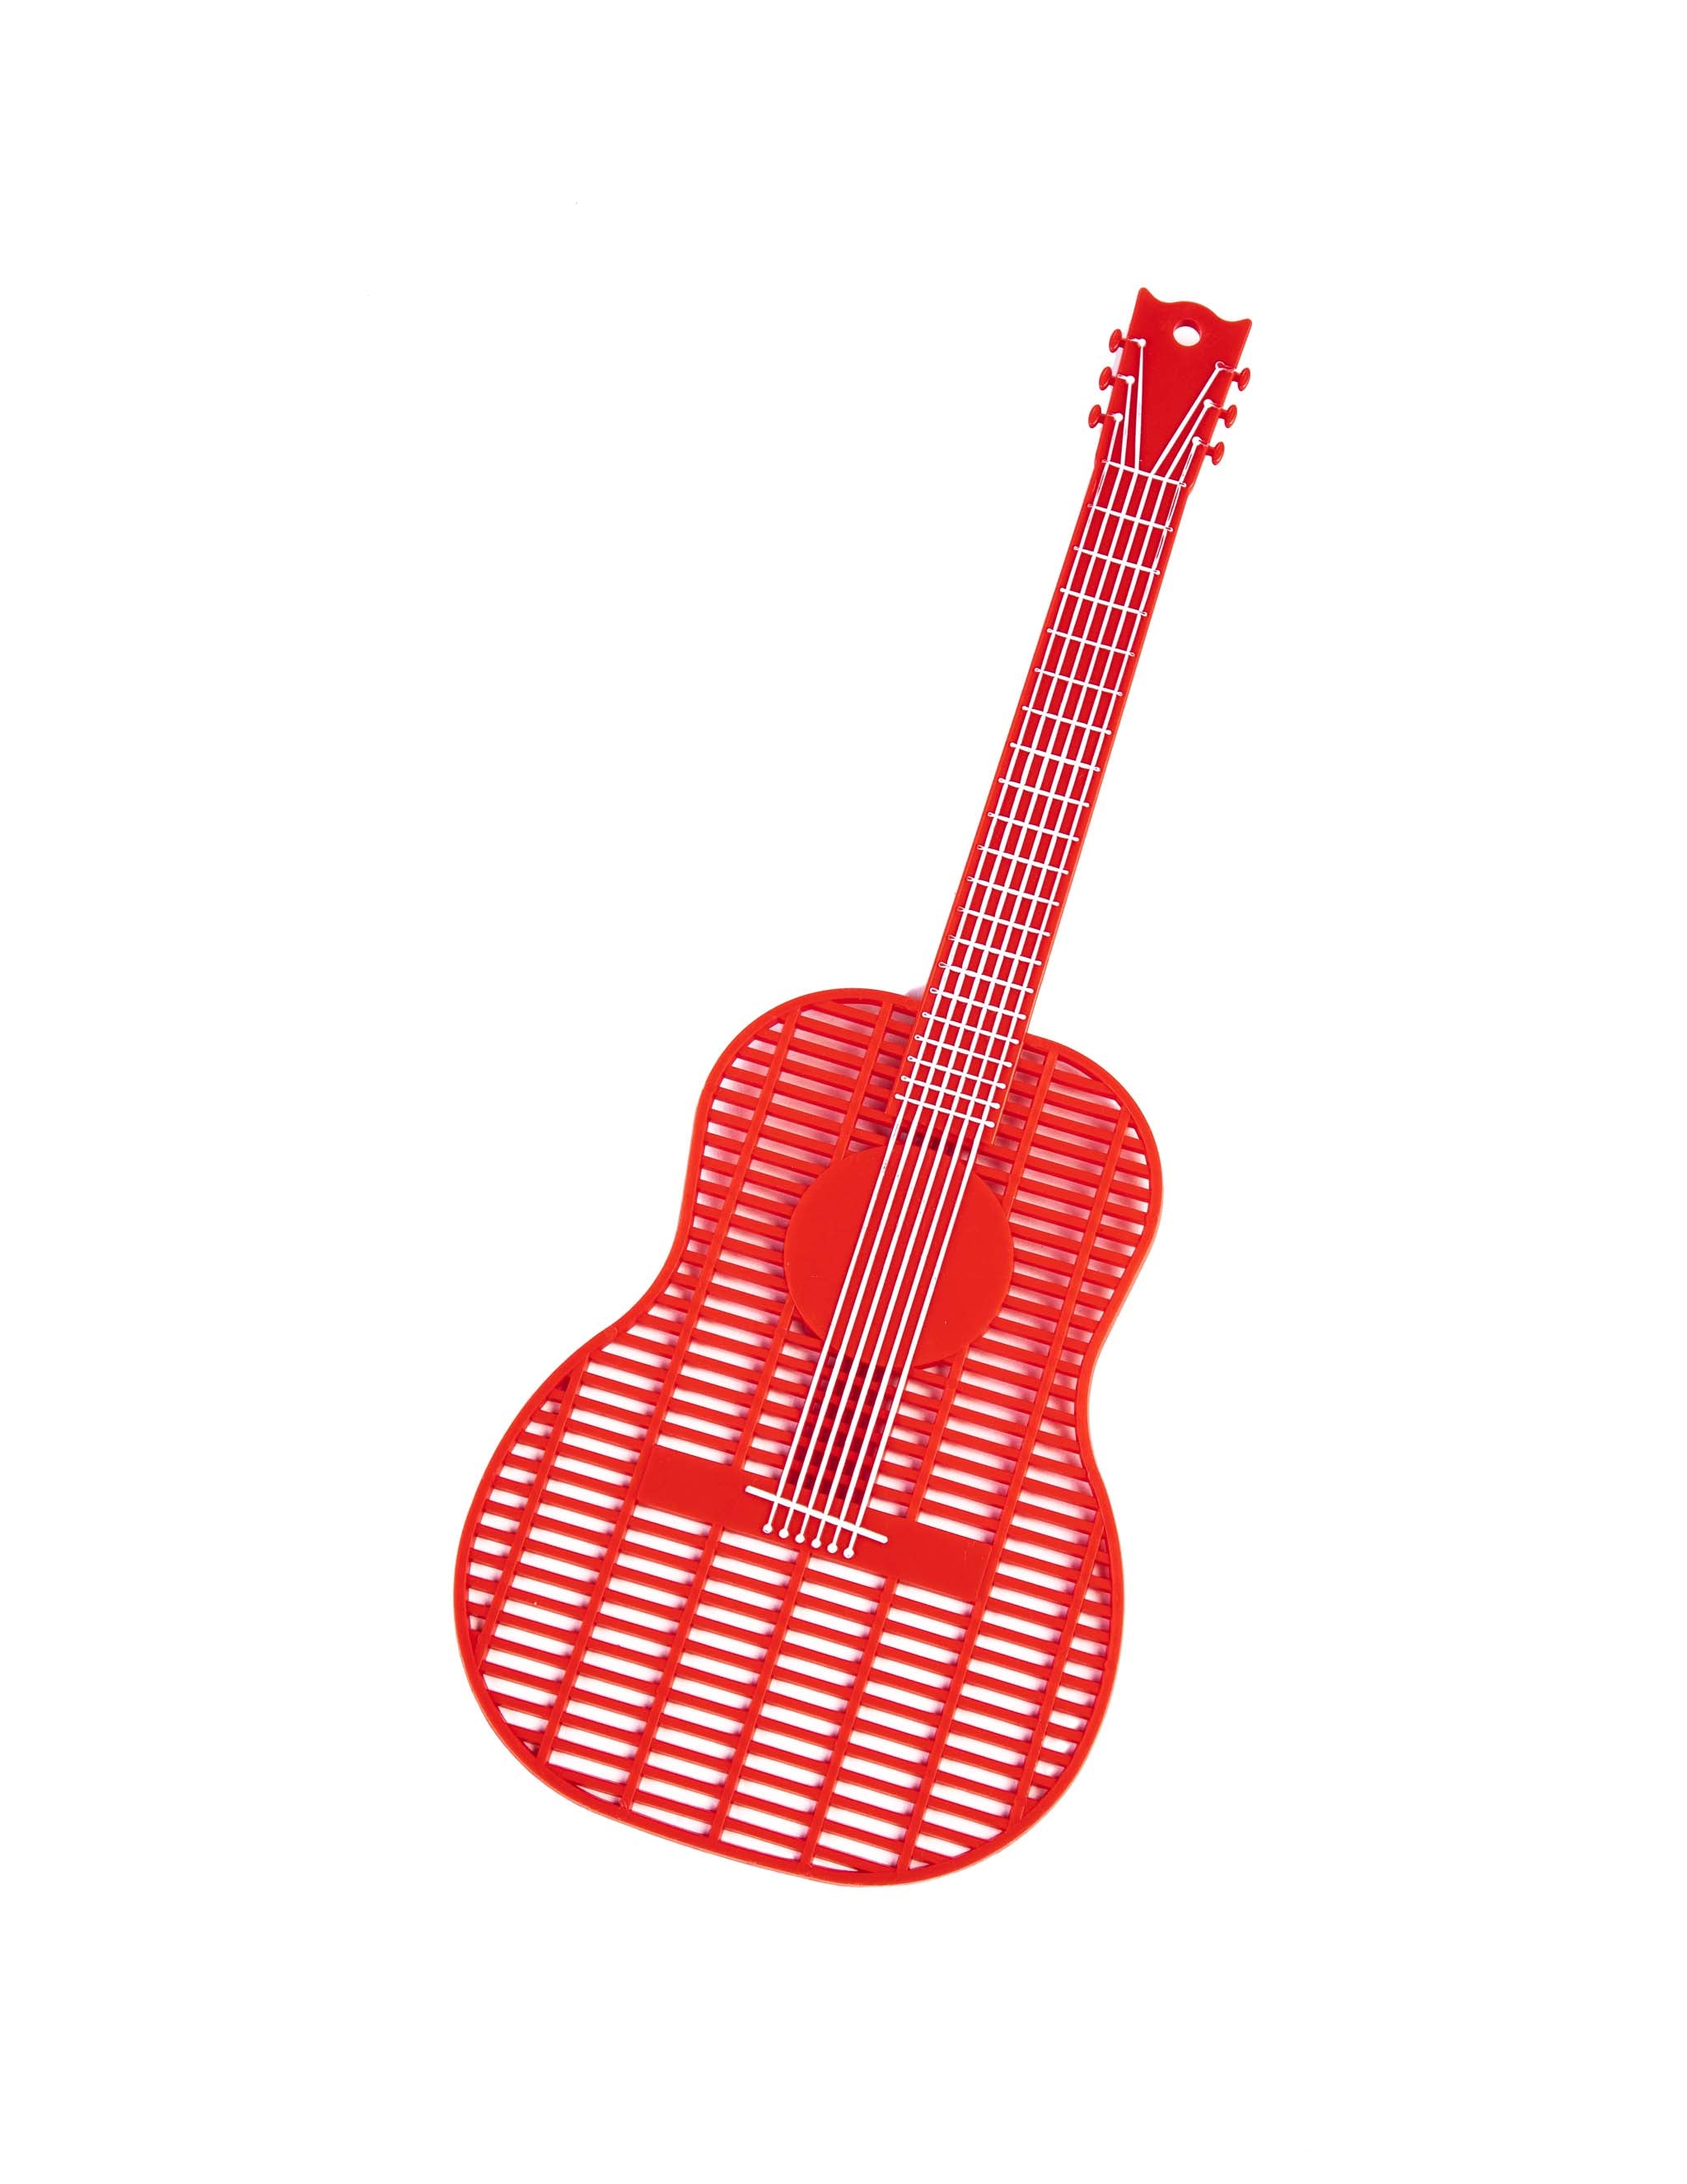 Ole Red Guitar Flyswatter